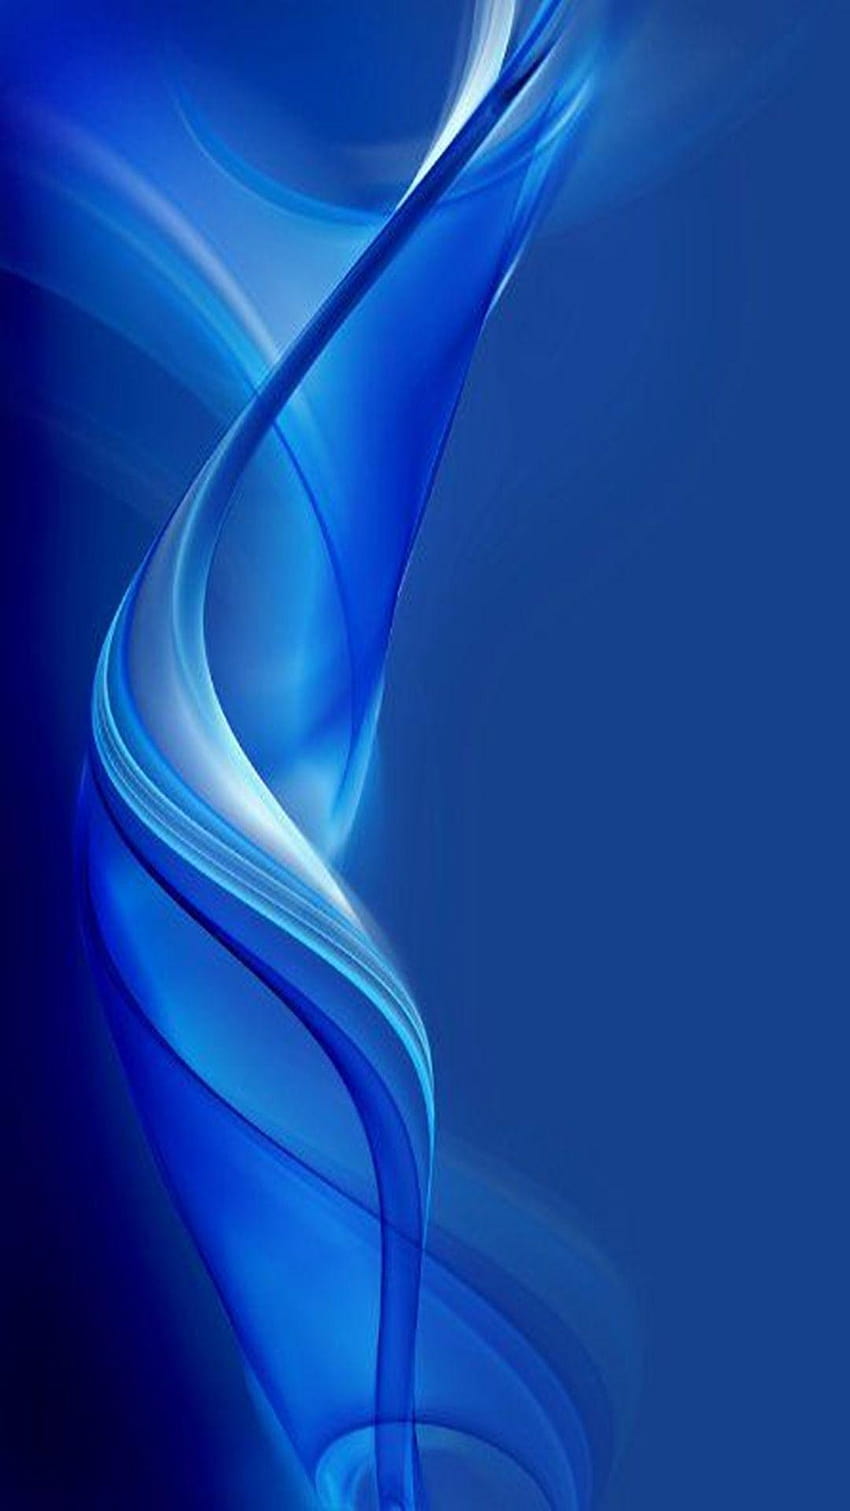 Blue Abstract Computer Wallpapers Desktop Backgrounds x | Royal blue  wallpaper, Dark blue wallpaper, Blue wallpapers